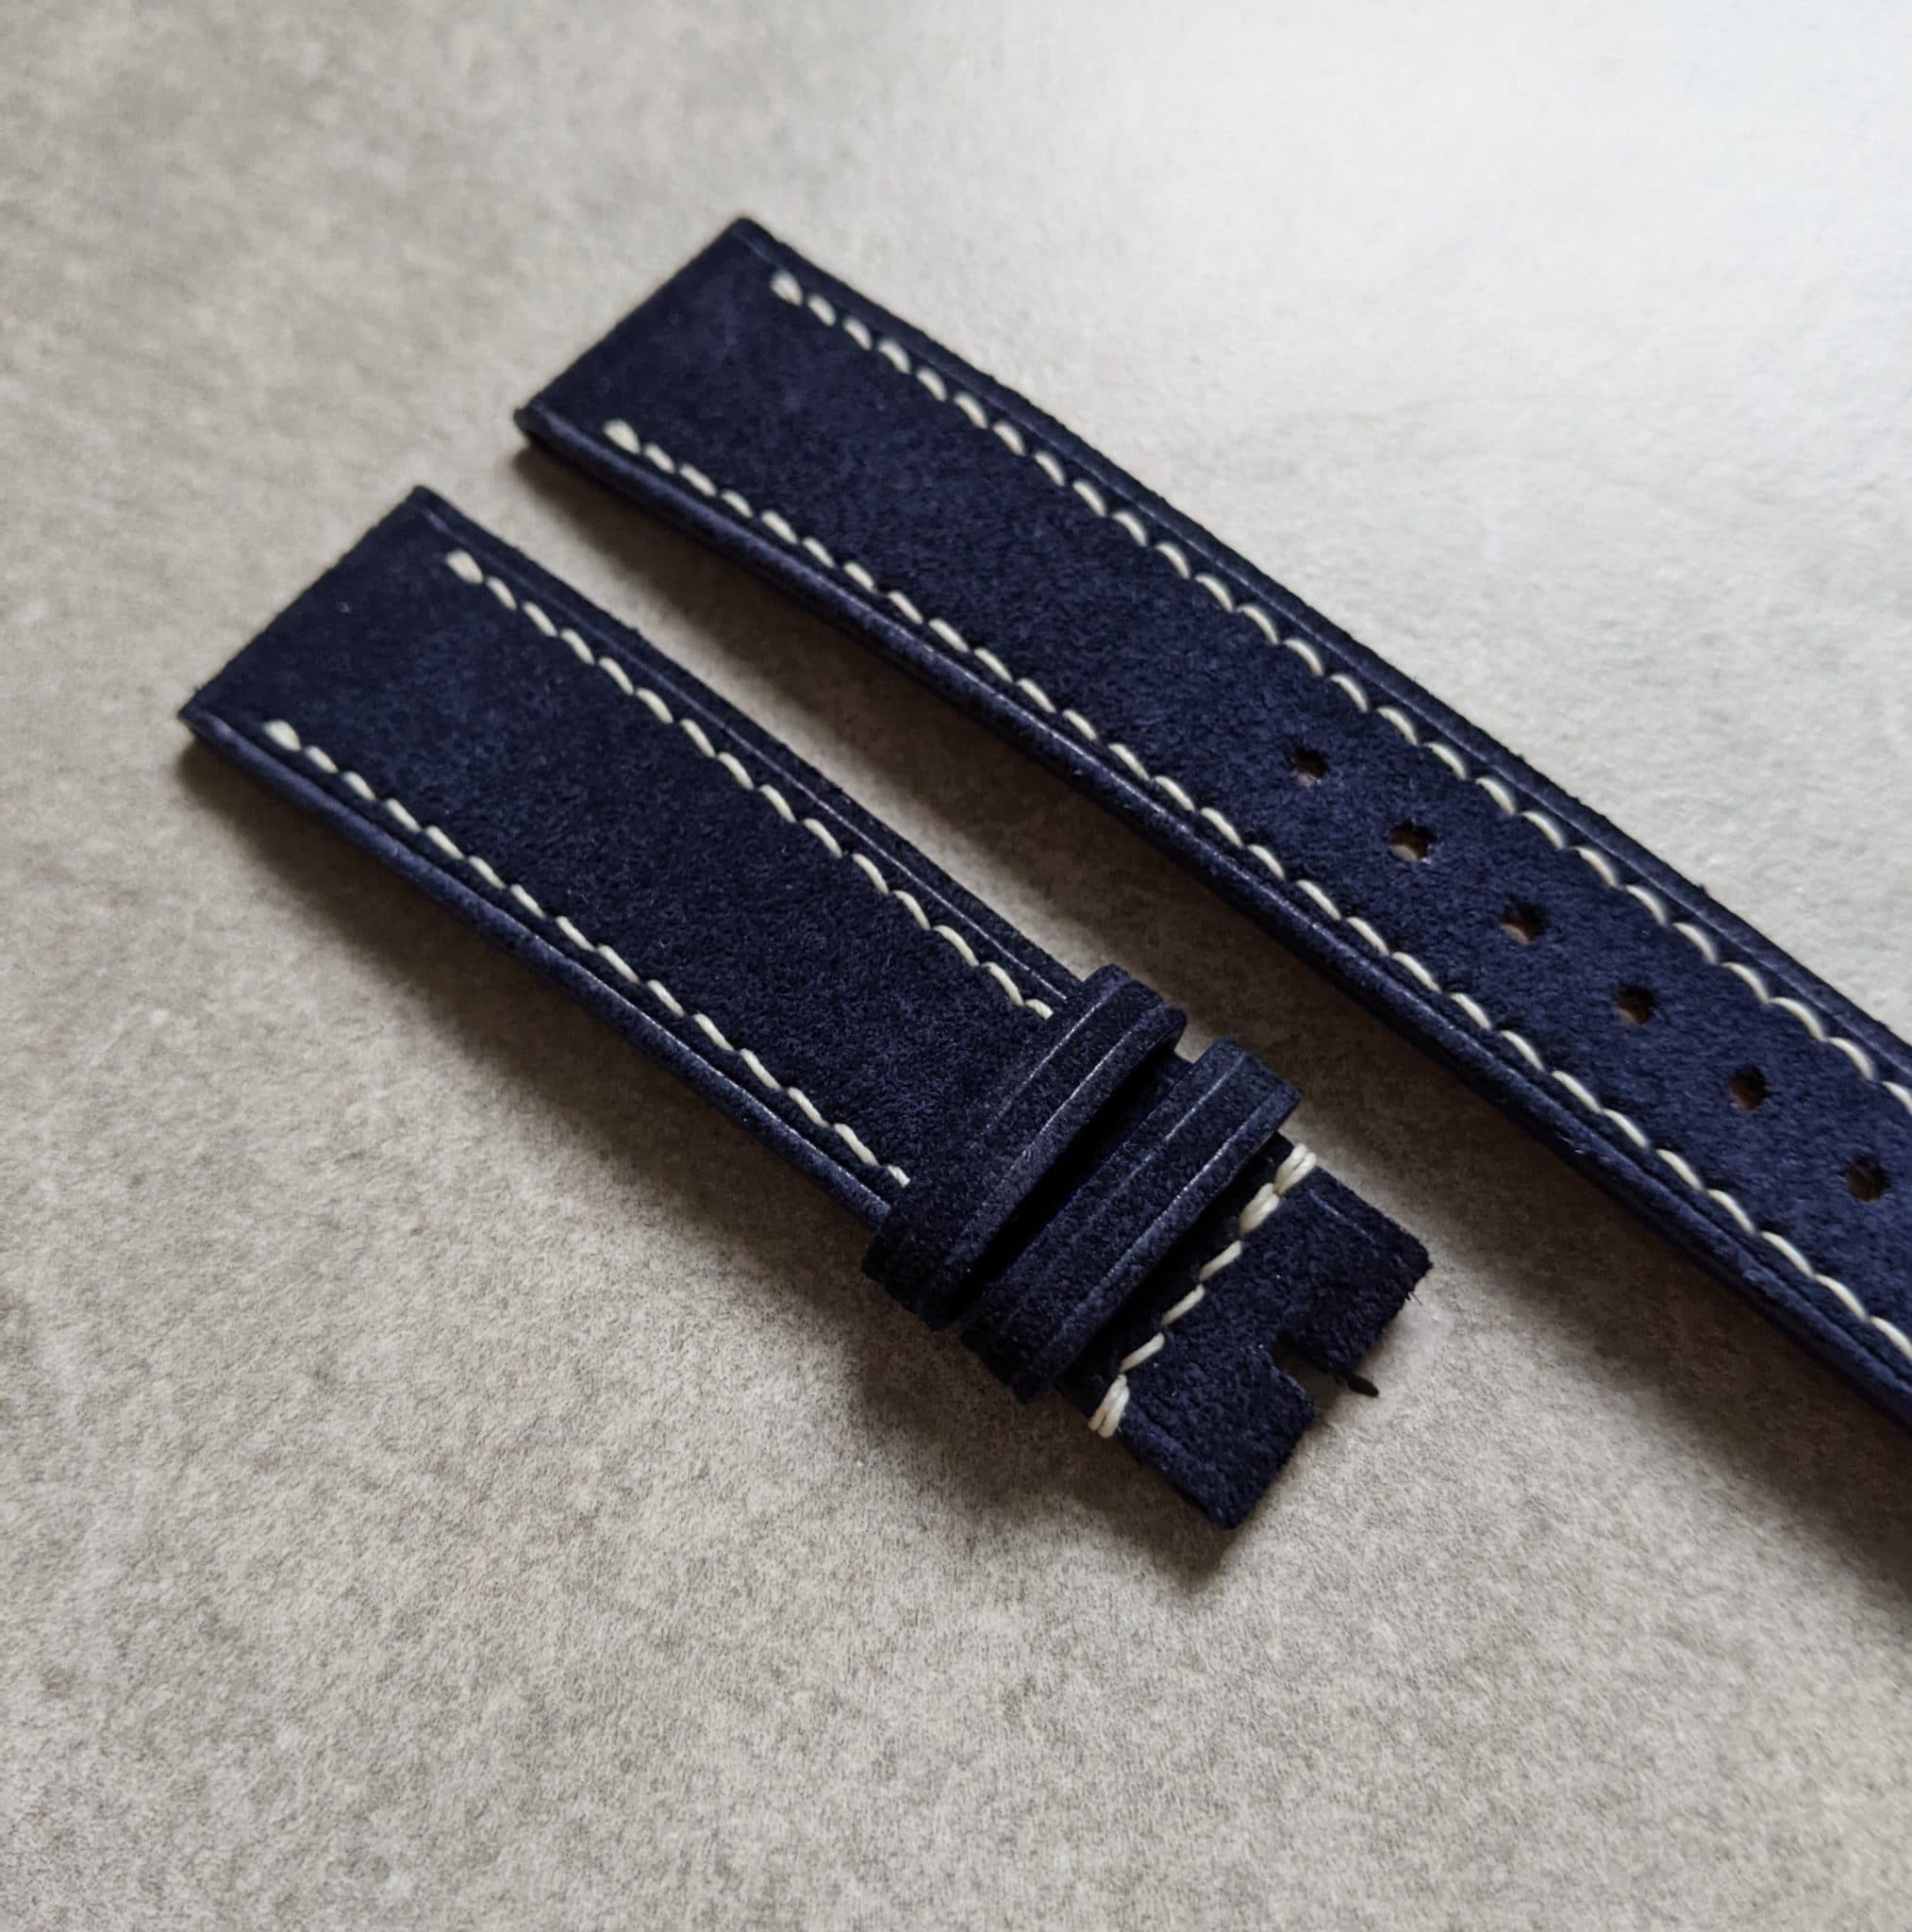 Premium Suede Strap - Navy Blue - The Strap Tailor